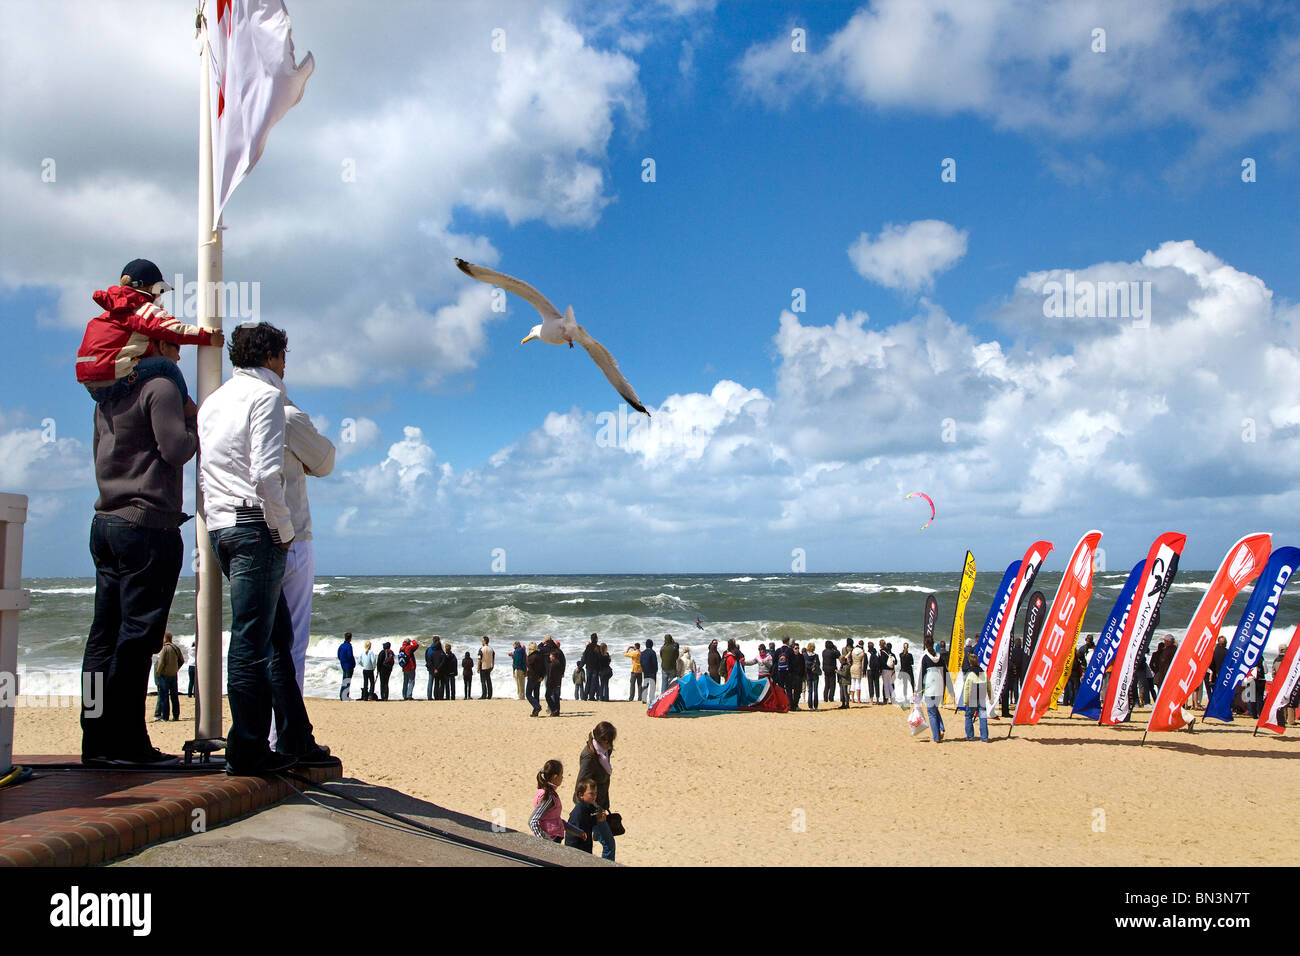 Kitesurfers on the beach (Kitesurf-Trophy), Westerland, Sylt, Schleswig-Holstein, Germany Stock Photo